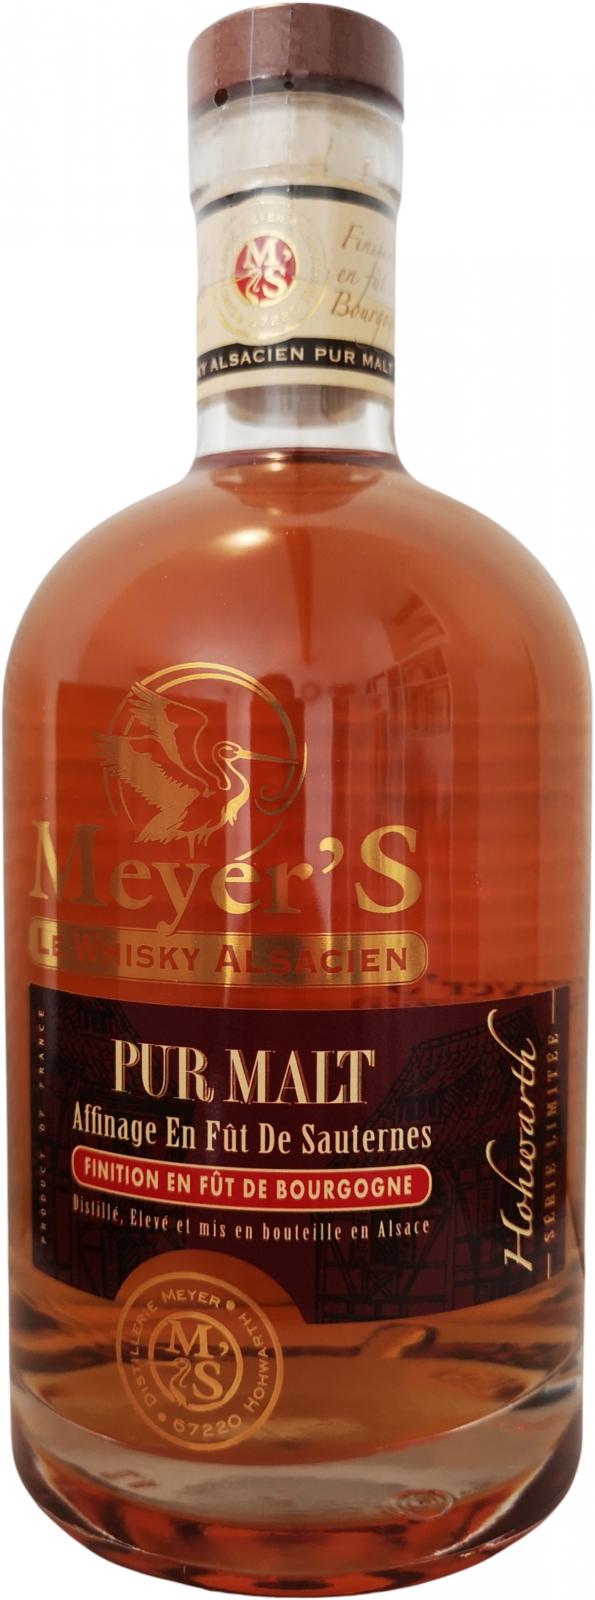 Meyer's Pur Malt